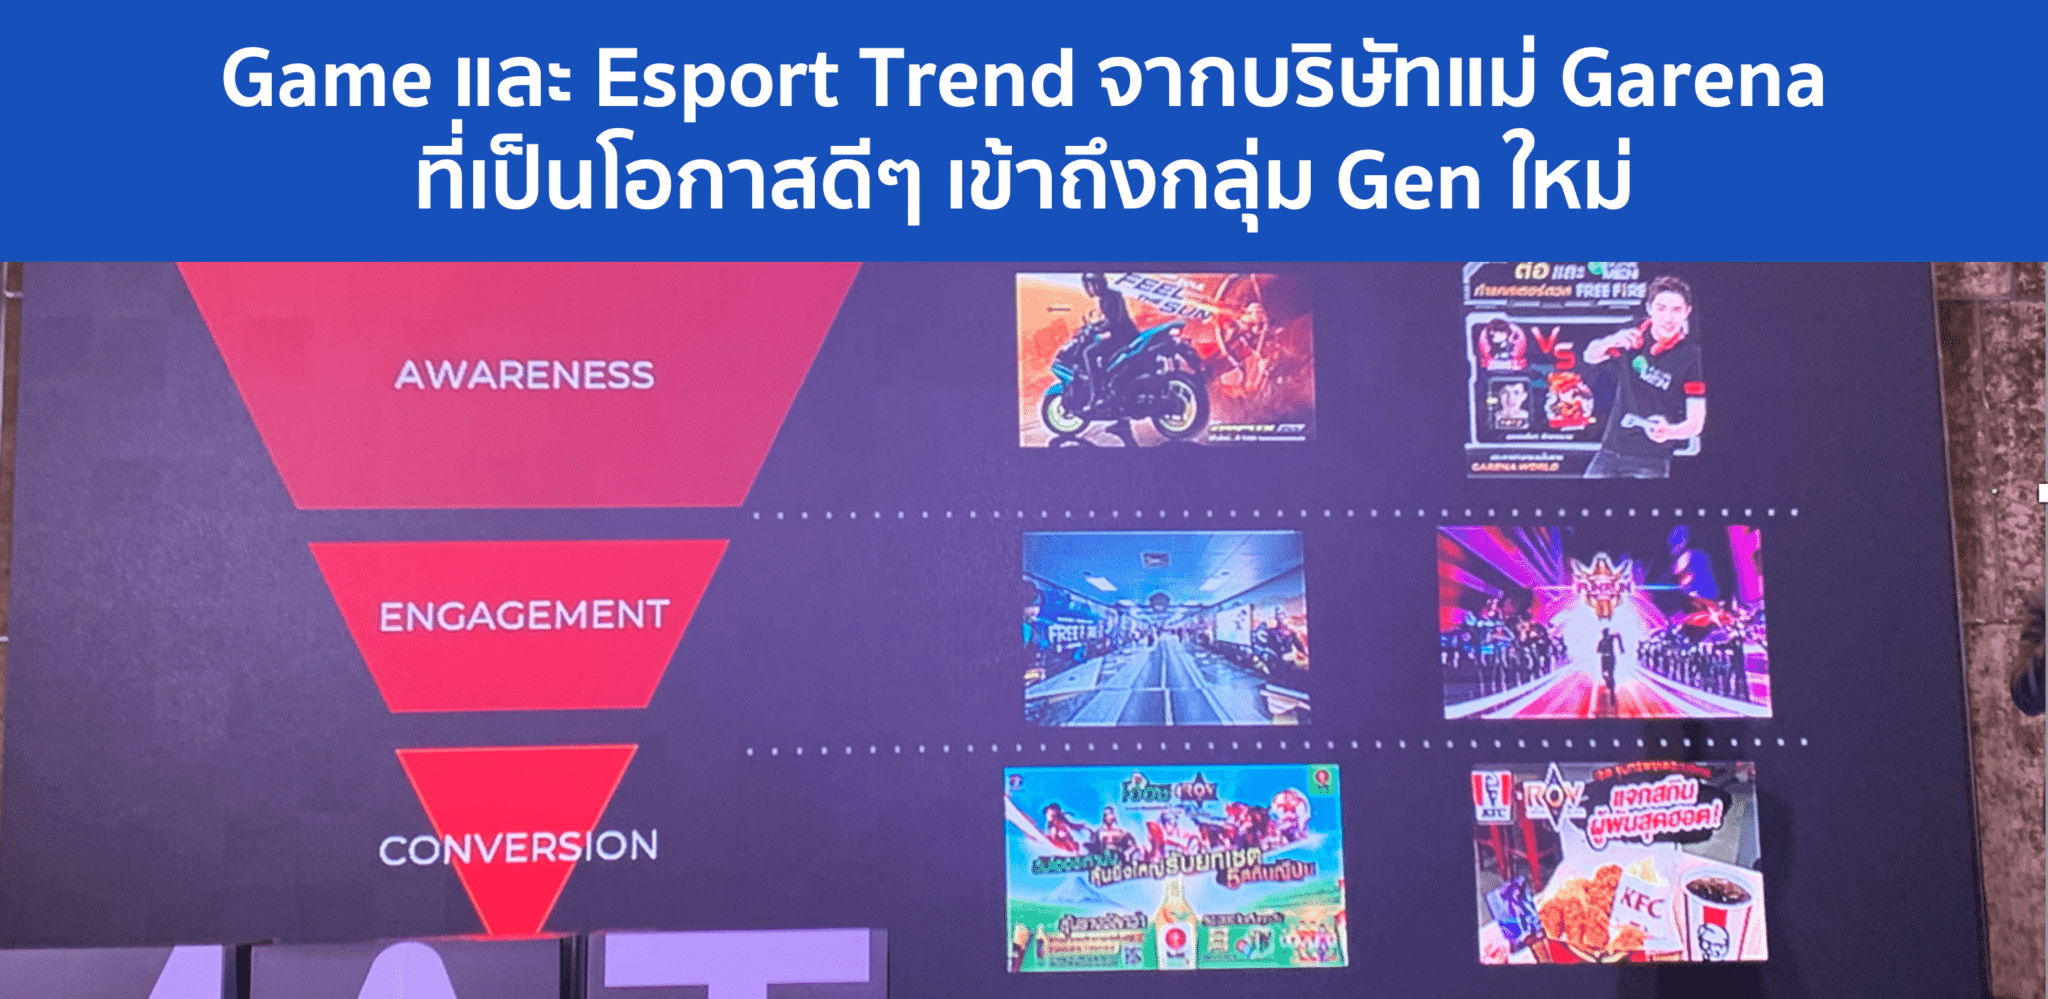 SEA Thailand บริษัทแม่ Garena เผย Game & ESport Trends ในไทย